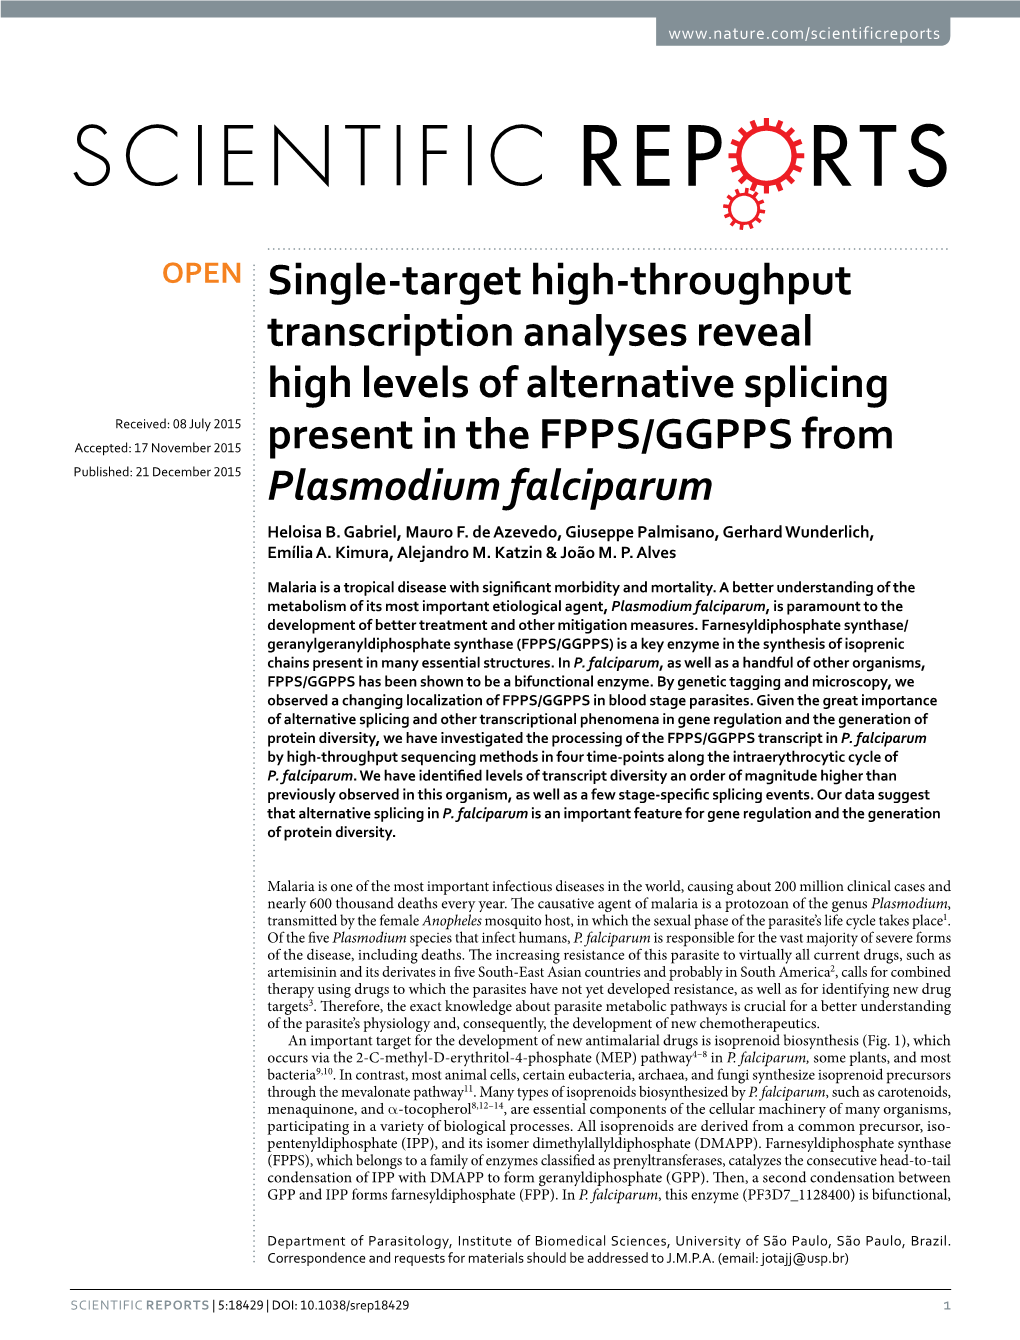 Single-Target High-Throughput Transcription Analyses Reveal High